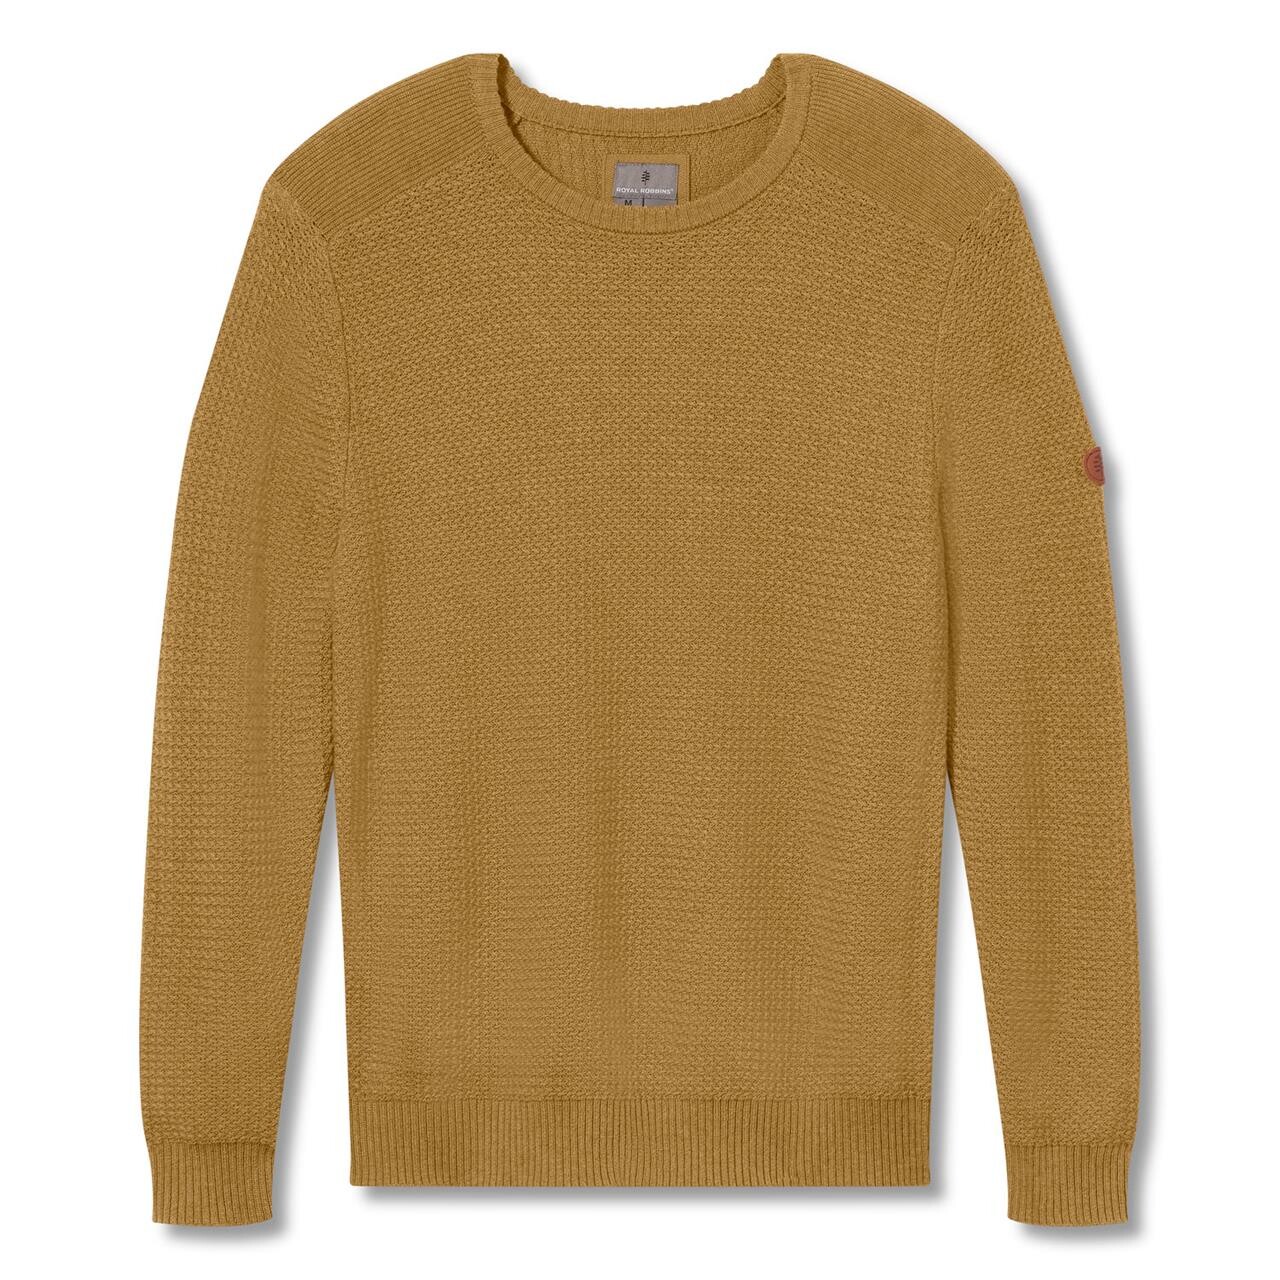 #3 - Royal Robbins Mens All Season Merino Sweater  (Brun (WOOD THRUSH) Medium)